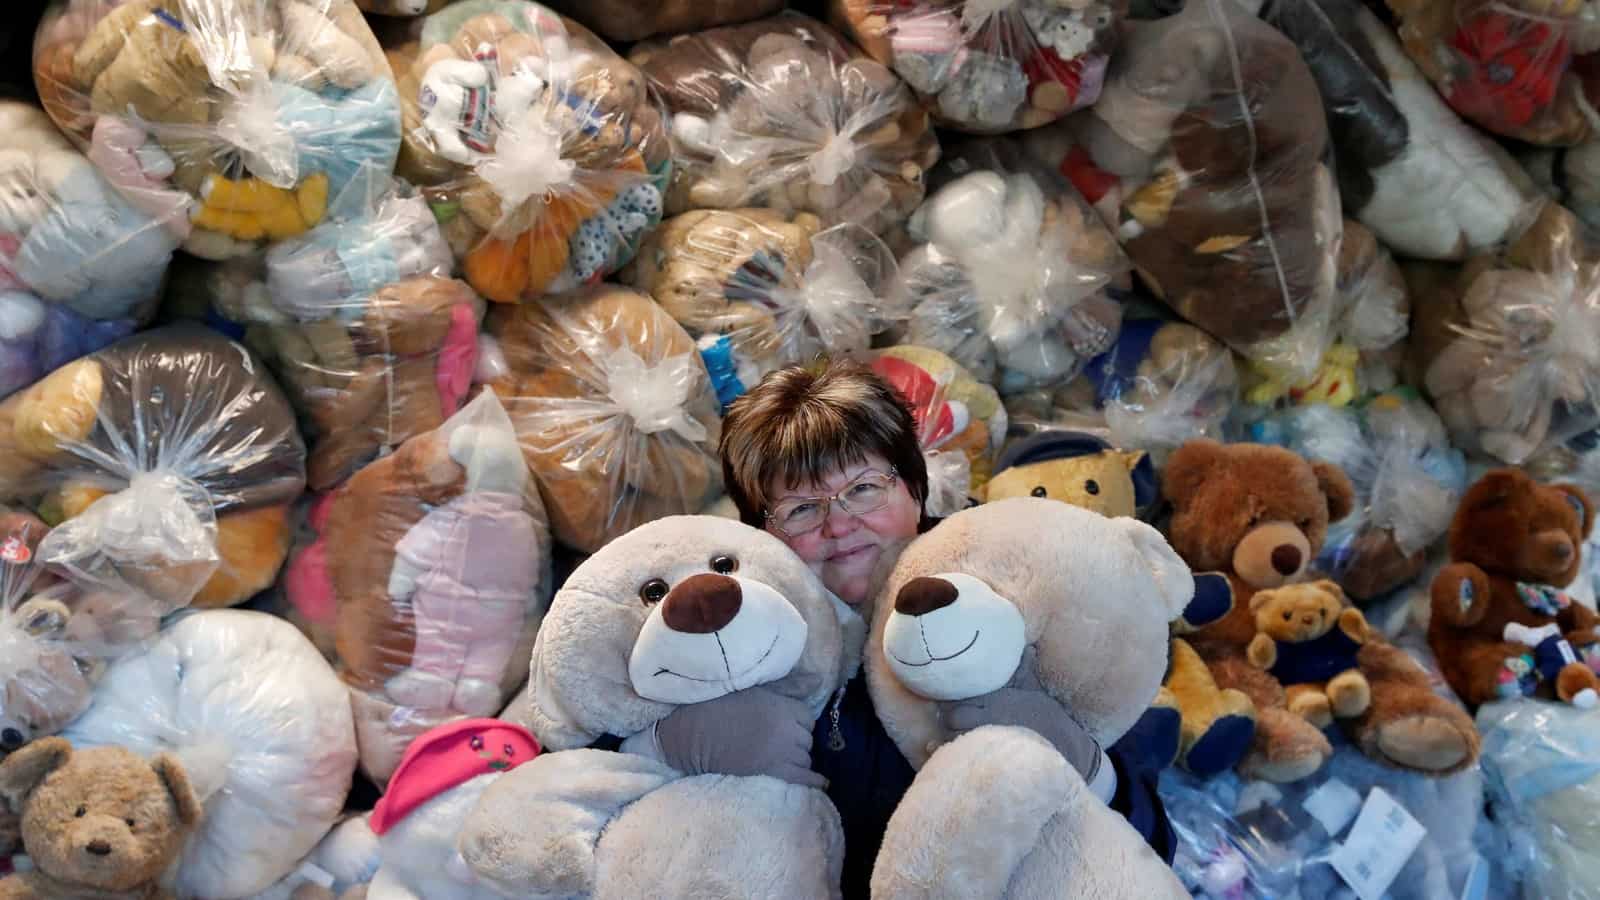 Hungry: Over 000 teddy bears 'hibernate' at warehouse waiting to bring kids joy